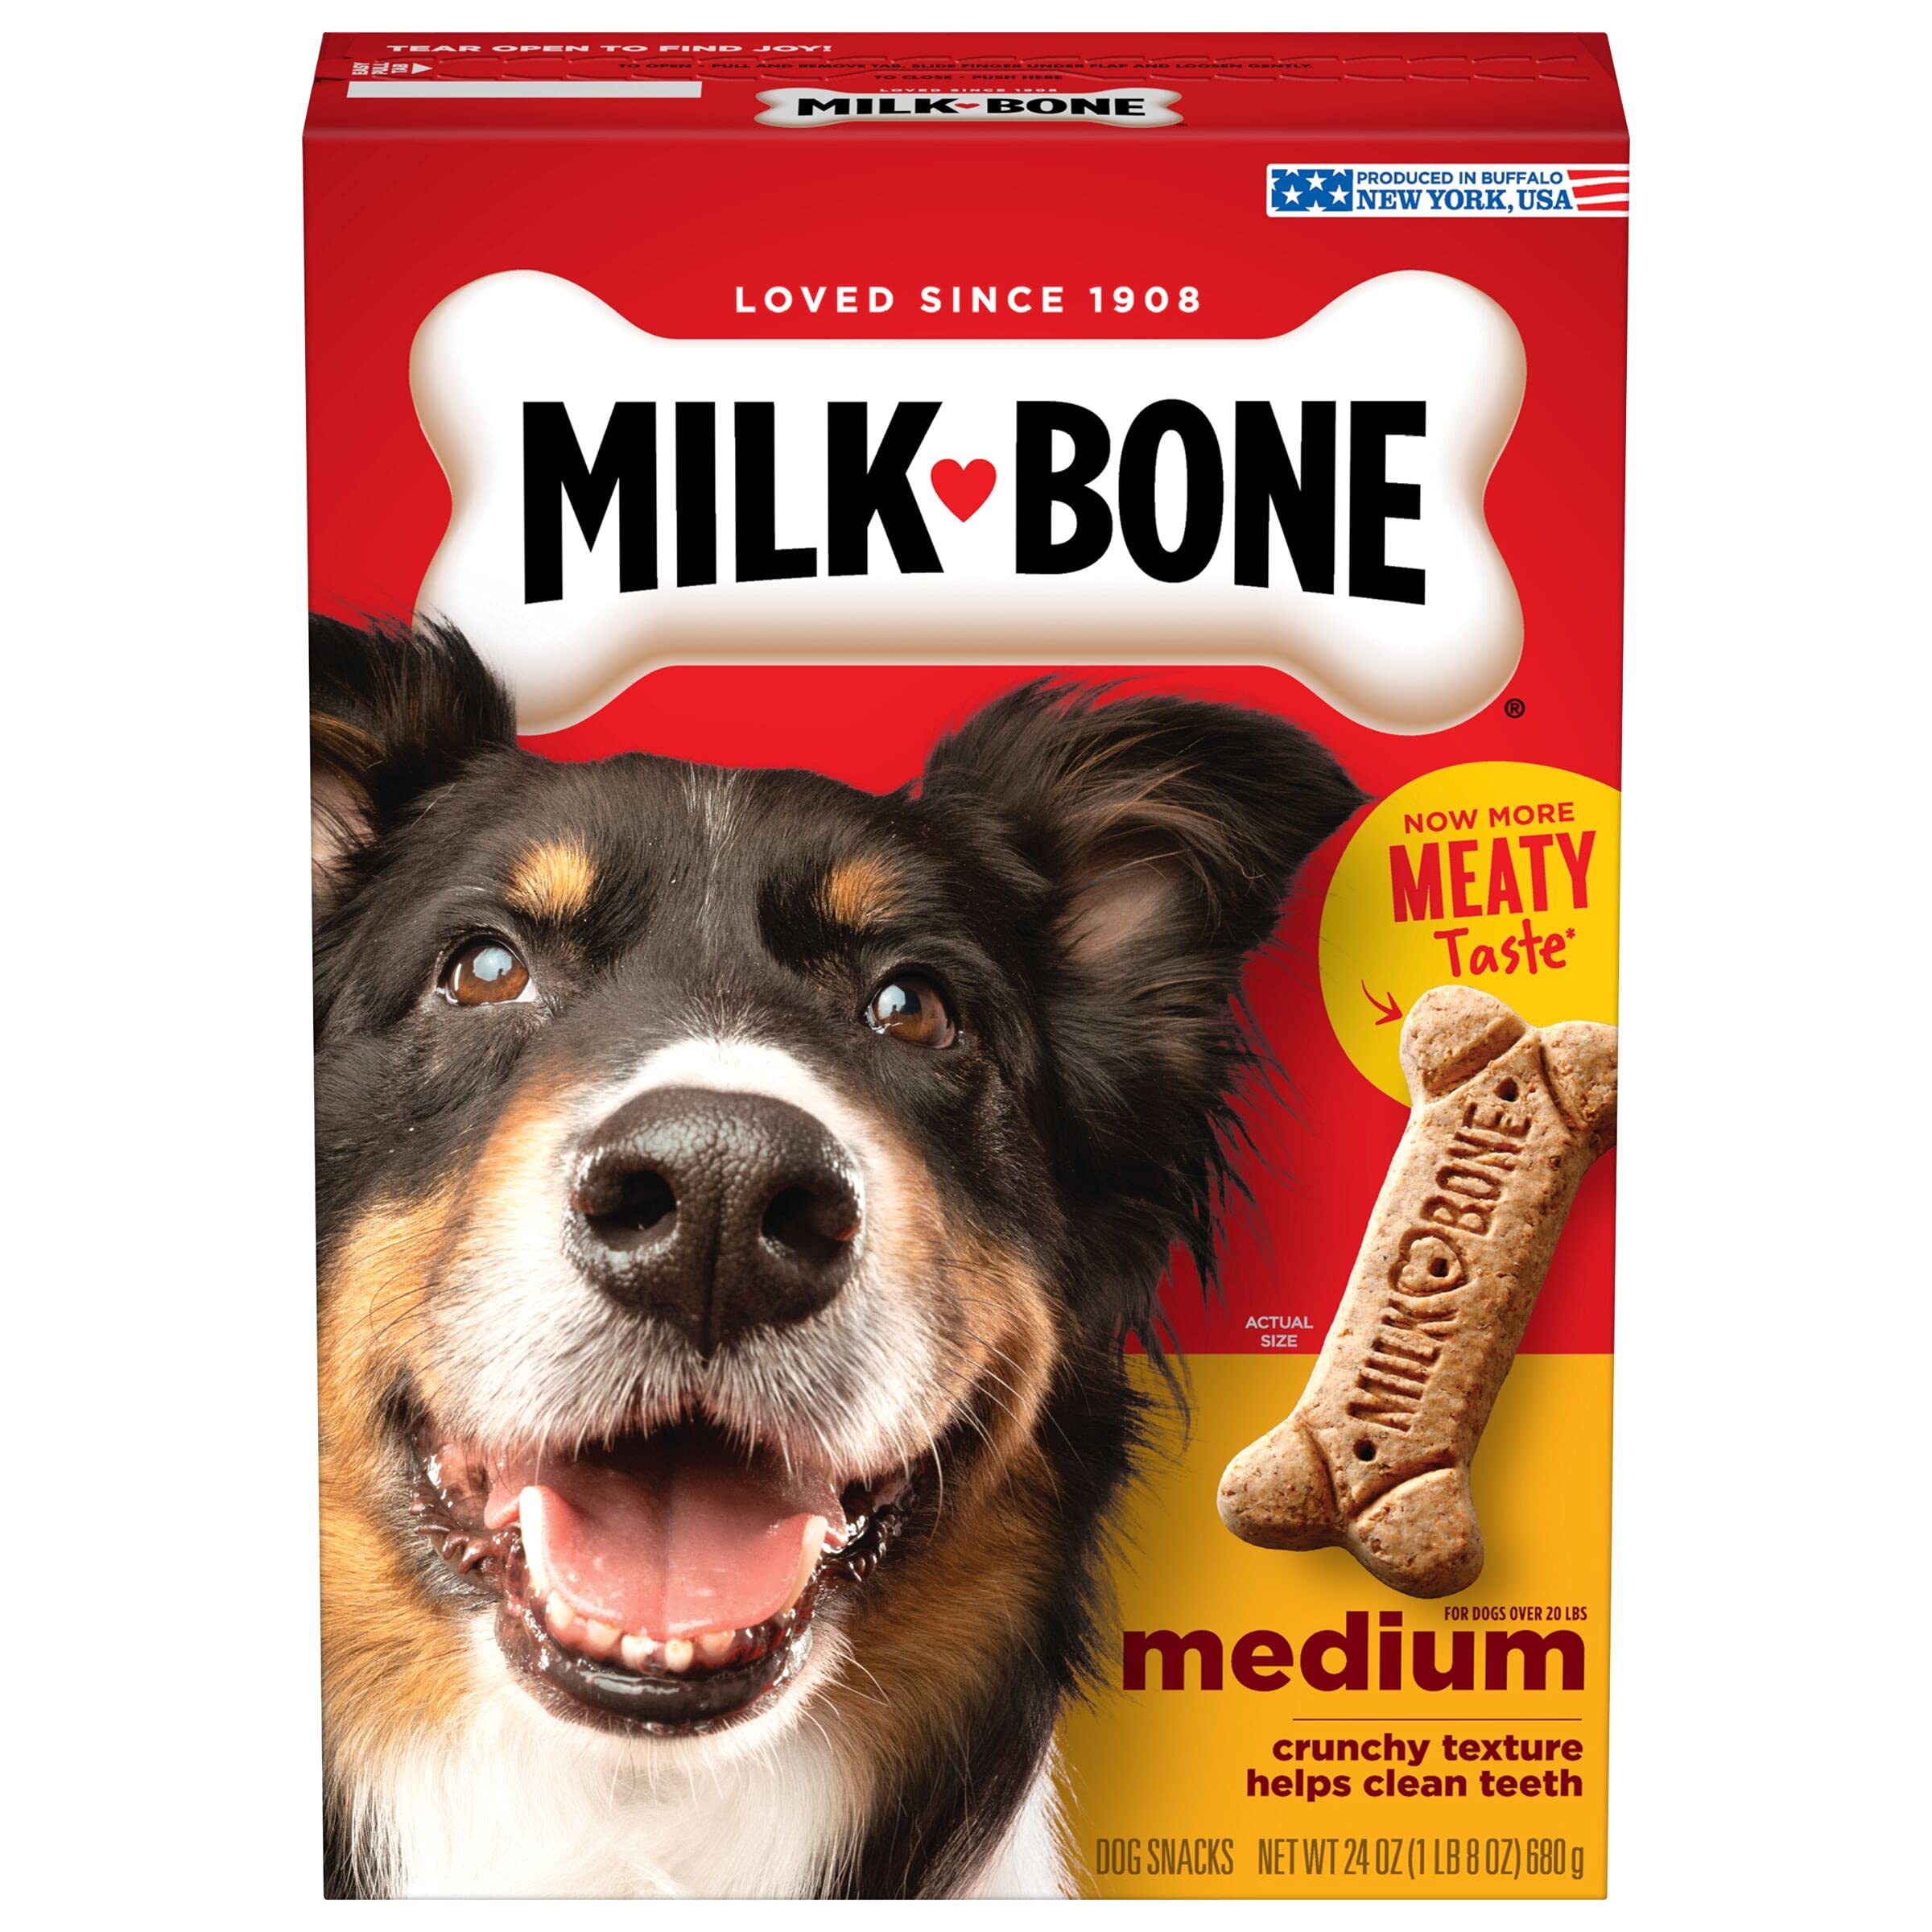 24-Oz Milk-Bone Original Dog Biscuit Treats (Medium) $2.50 w/ S&S + Free Shipping w/ Prime or on $35+